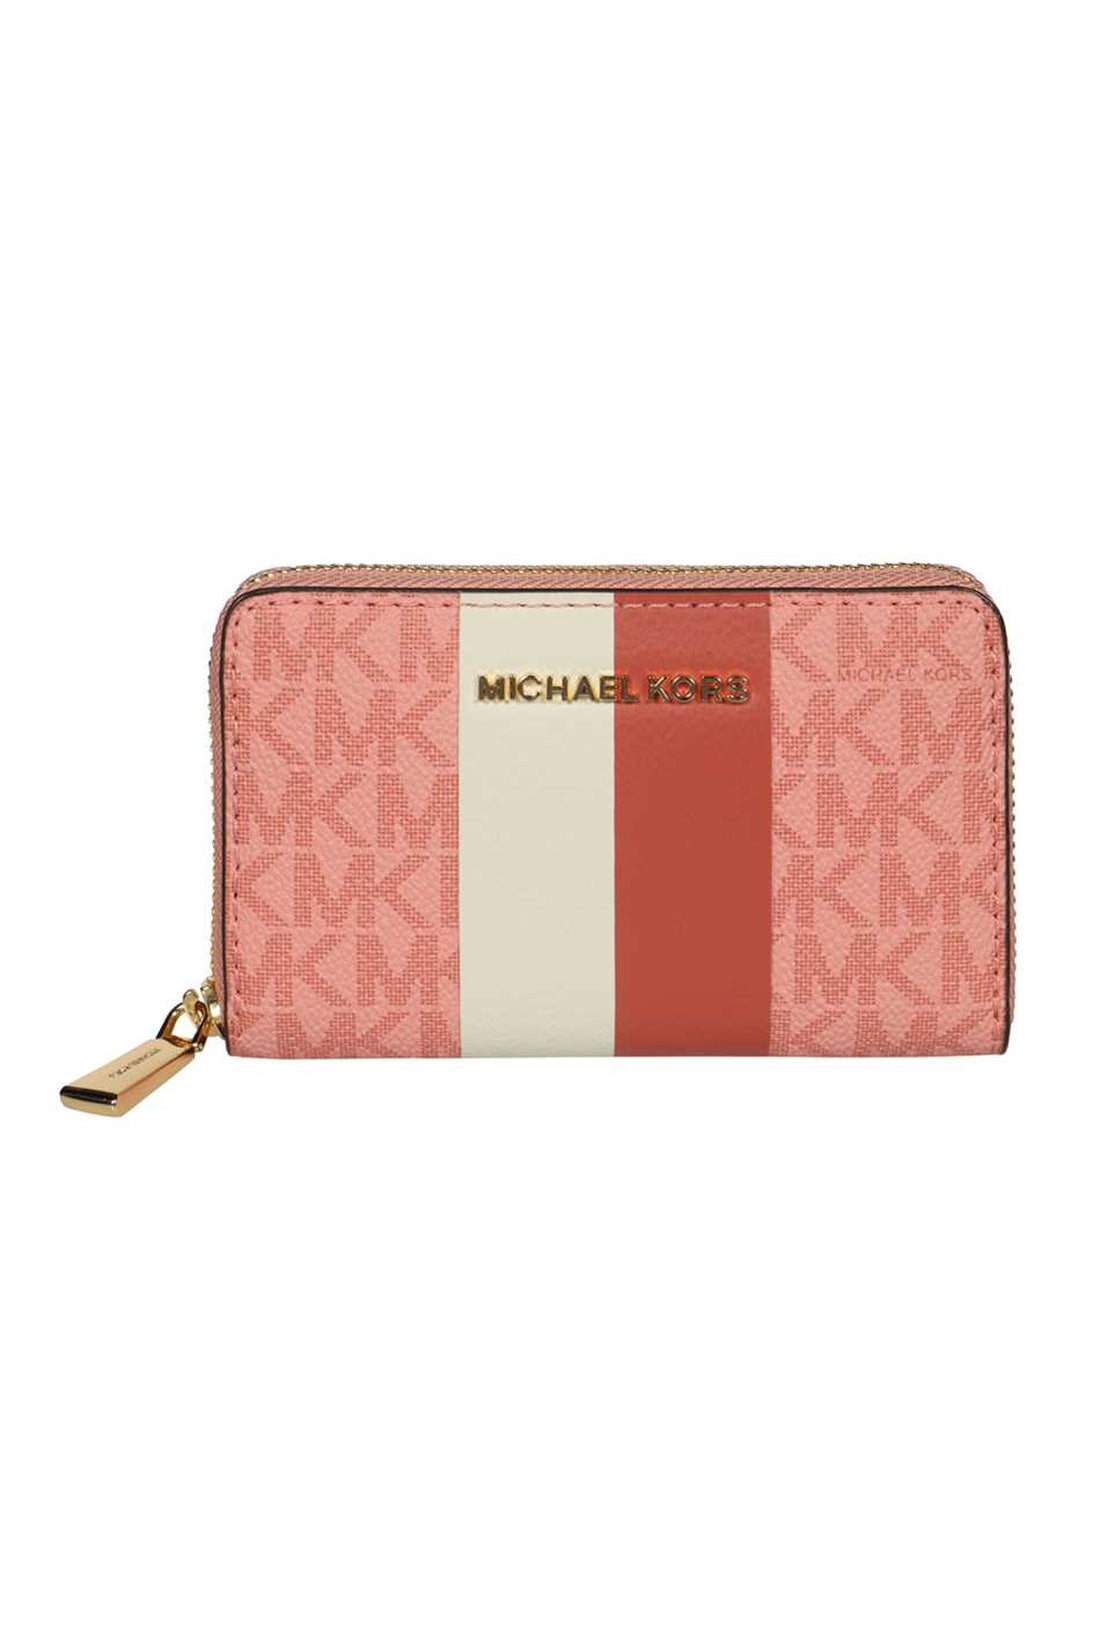 MICHAEL MICHAEL KORS-OUTLET-SALE-Dahlia small zip around wallet-ARCHIVIST